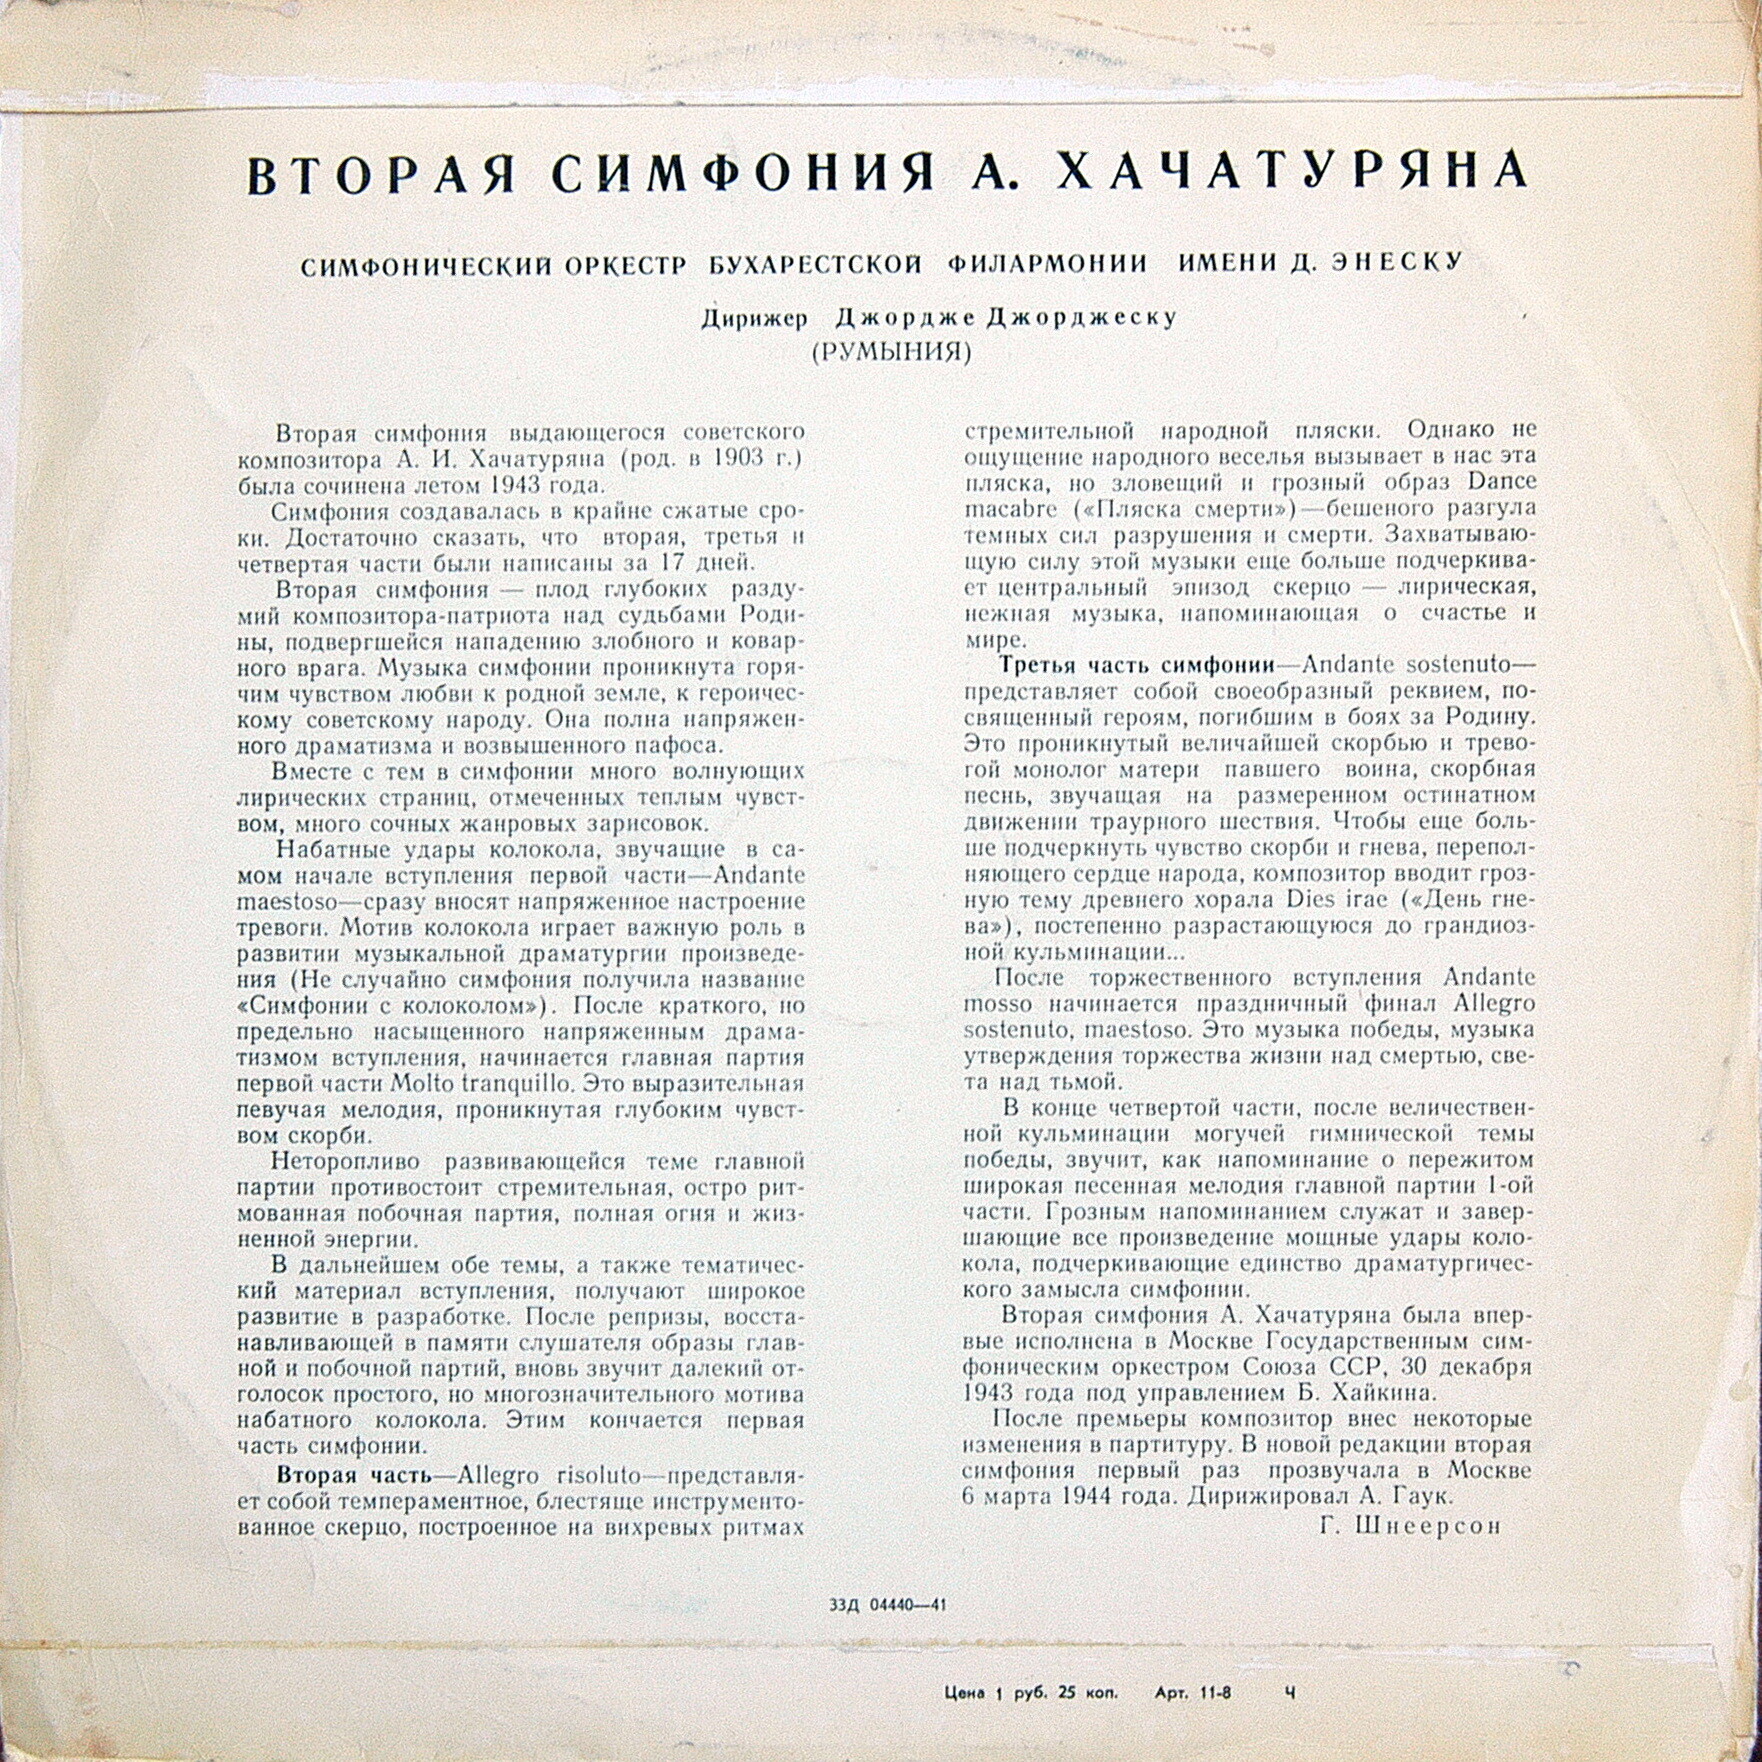 А. ХАЧАТУРЯН (1903–1978): Симфония № 2 ля минор (Д. Джорджеску)